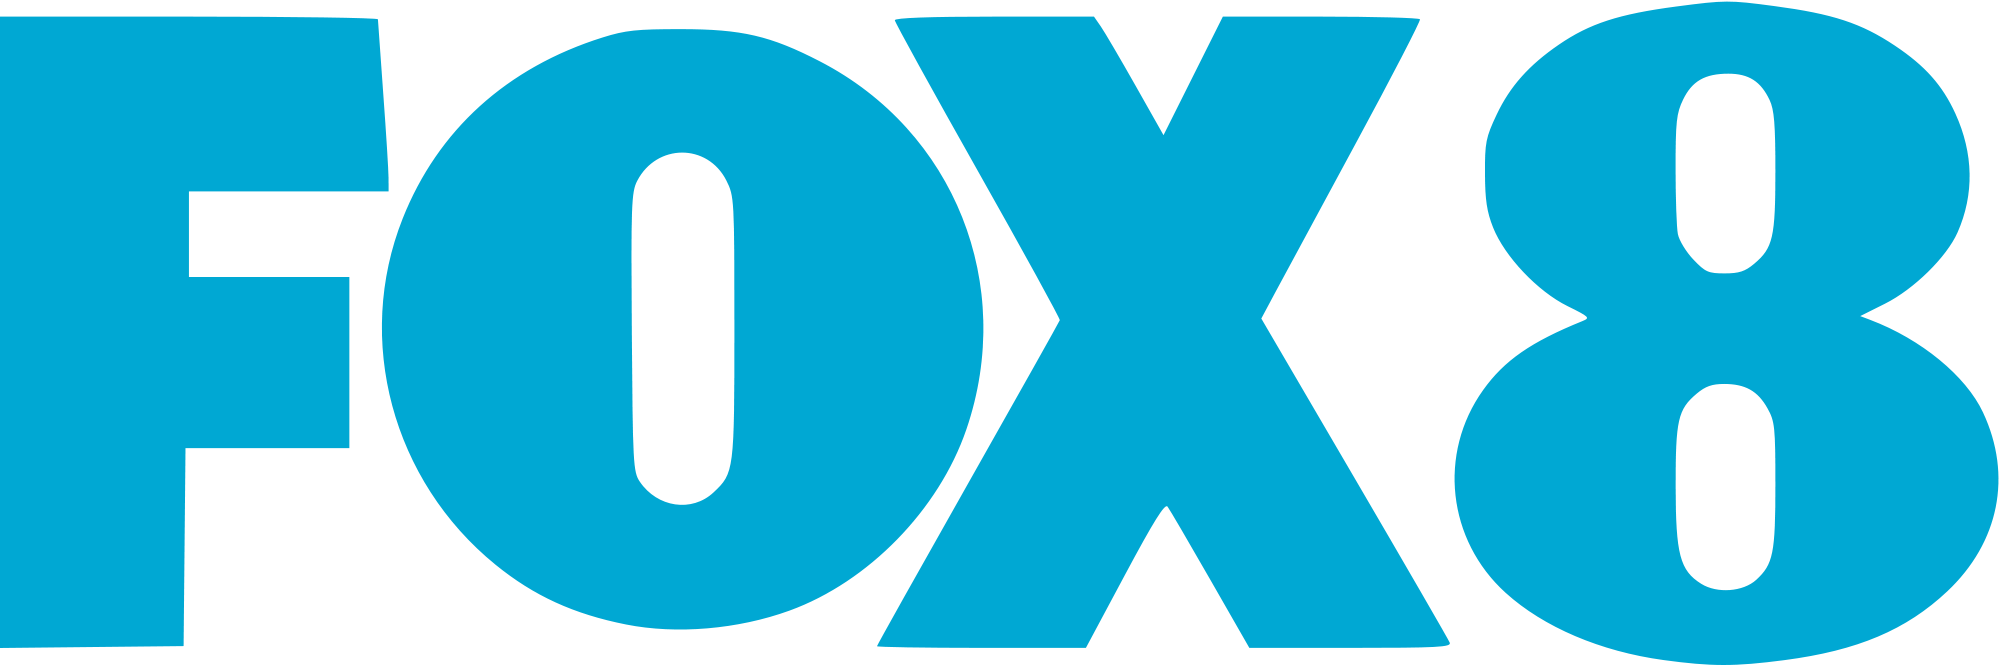 Сайт 0 12. Fox TV logo. Fan логотип канала. Логотип 8. Австралийские логотипы каналов.